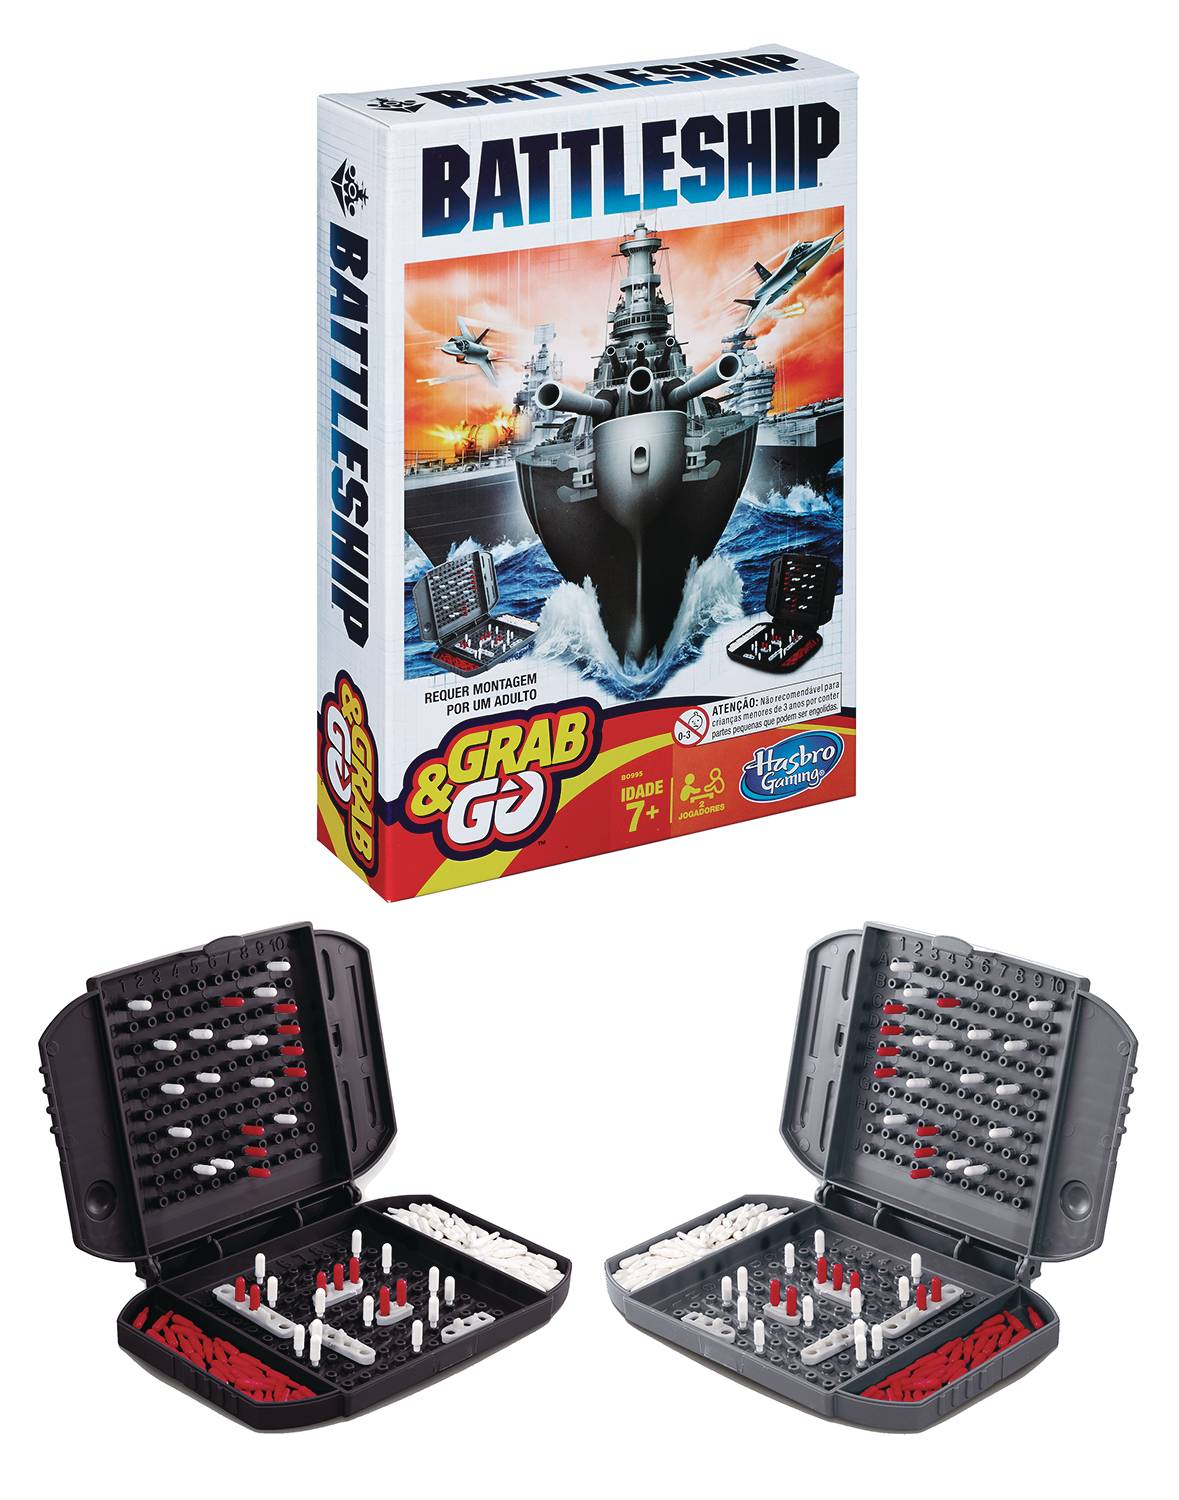 Grab & Go Battleship Game Cs